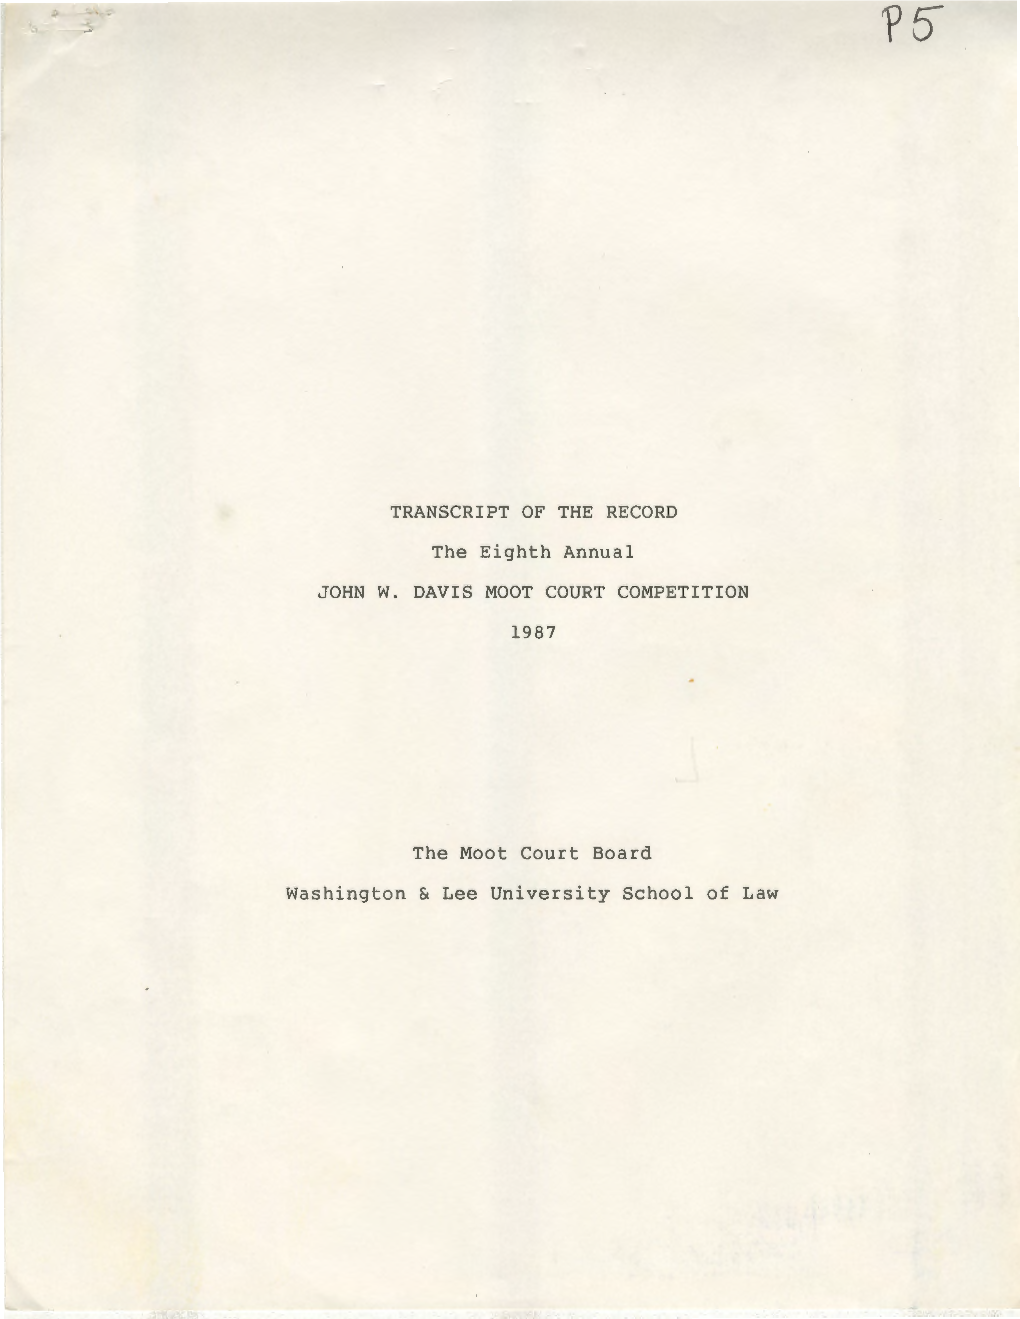 TRANSCRIPT of the RECORD the Eighth Annual JOHN W. DAVIS